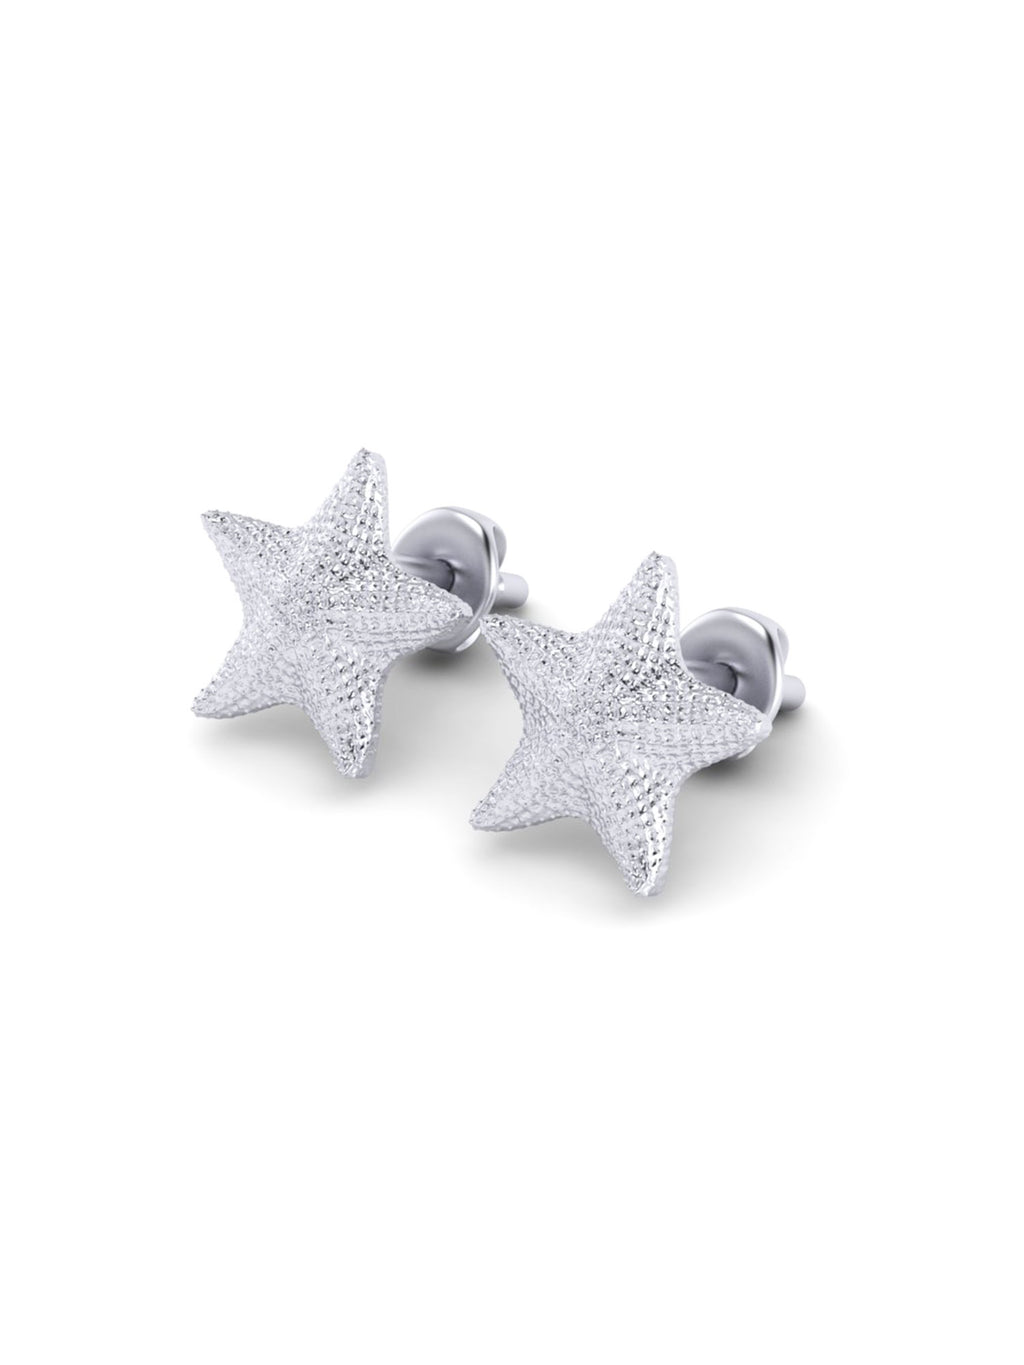 Eco silver stud earrings SEA STAR